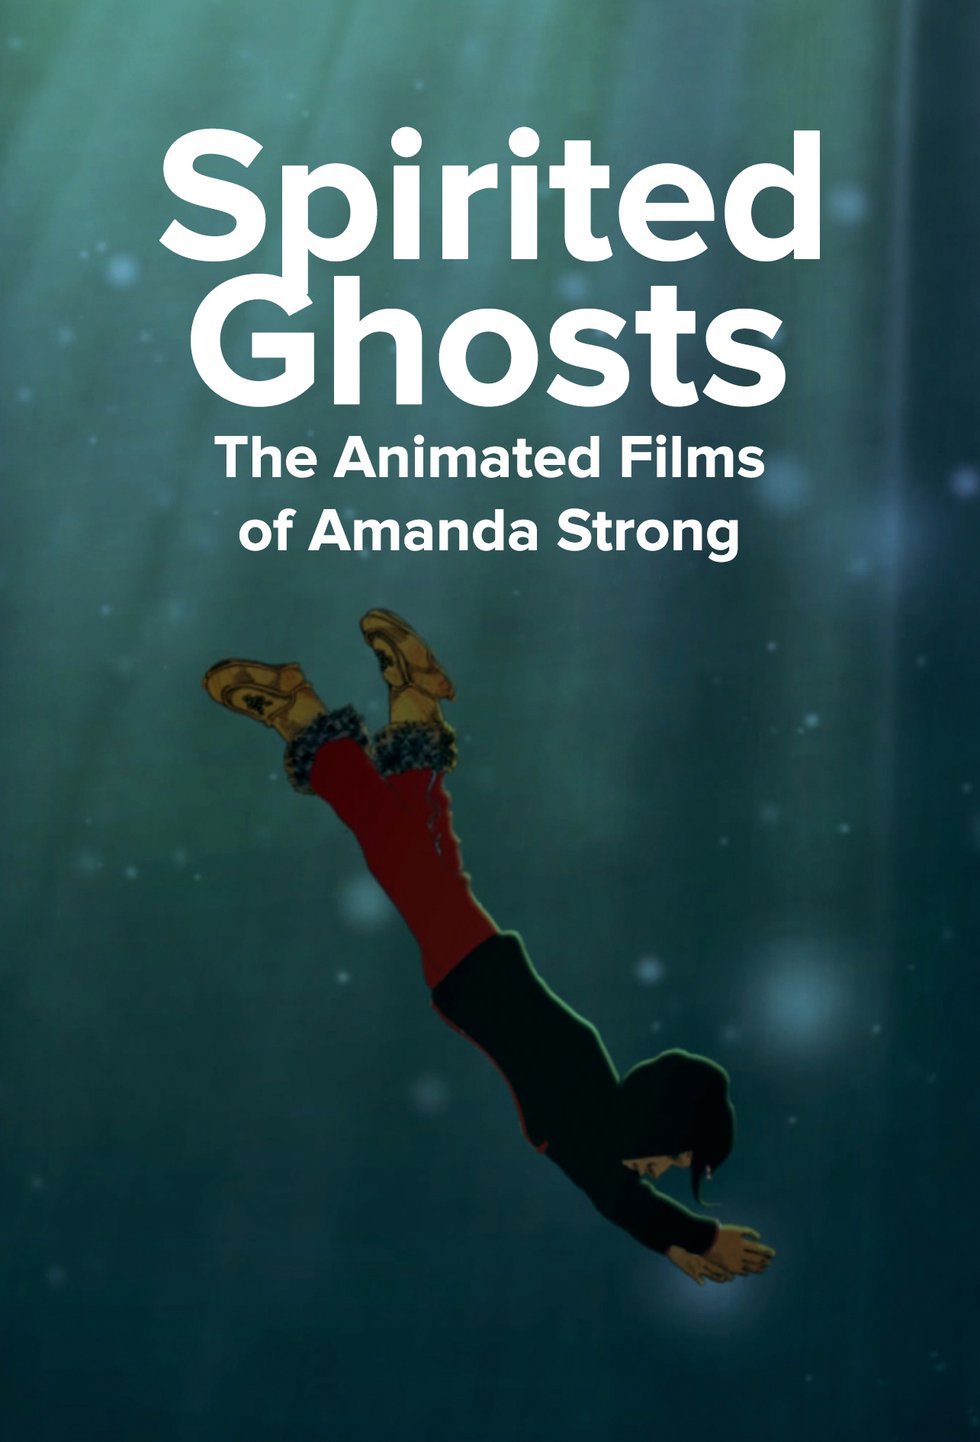 Amanda Strong, "Spirited Ghosts," 2021